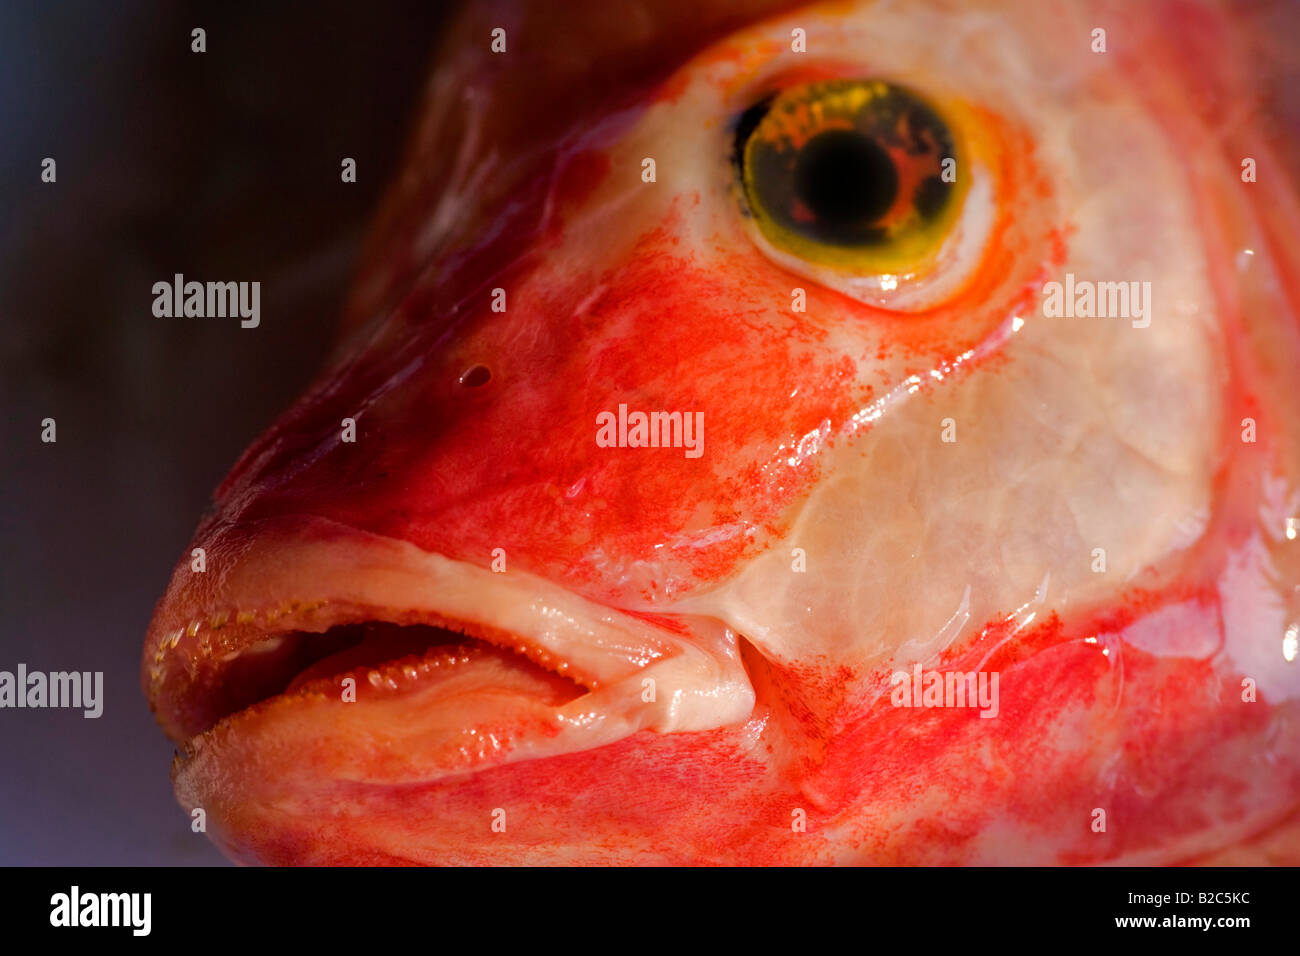 Red Snapper (Lutjanus campechanus), close-up view Stock Photo - Alamy